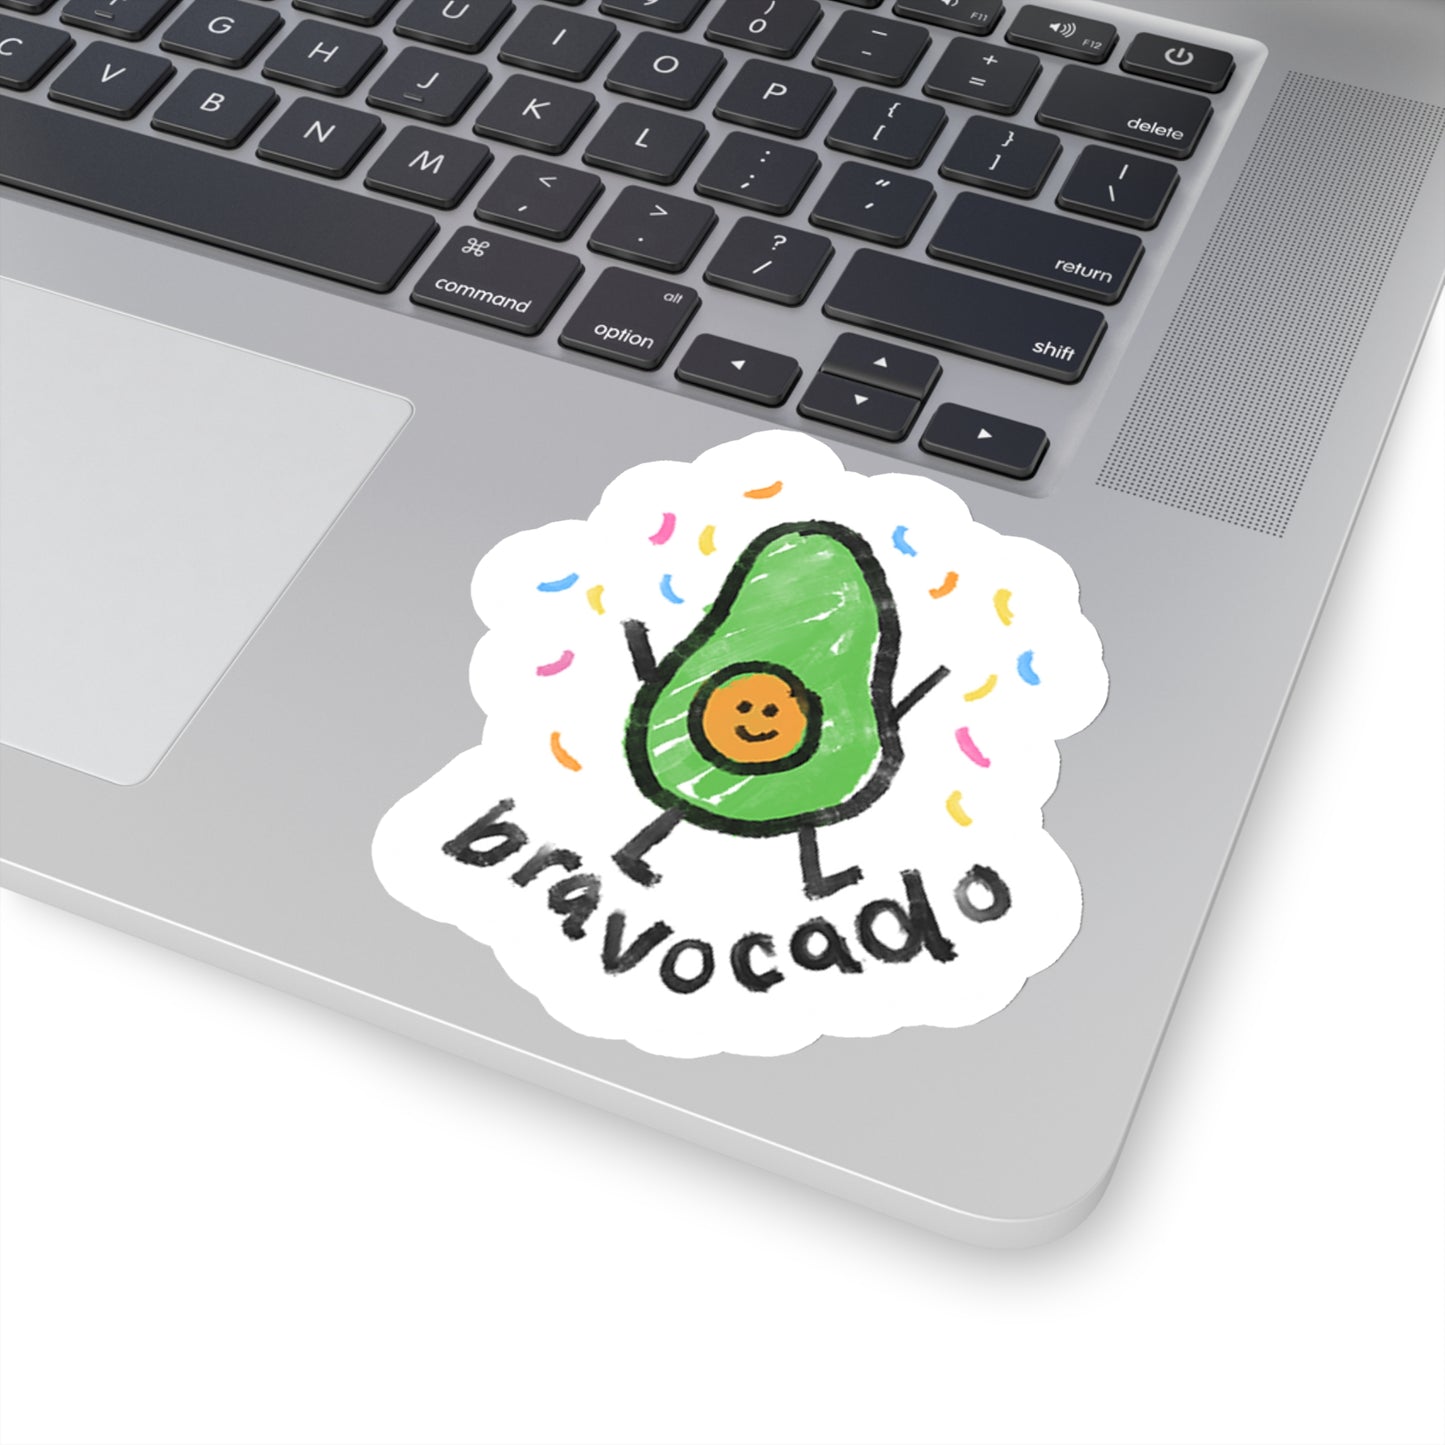 Bravocado Sticker